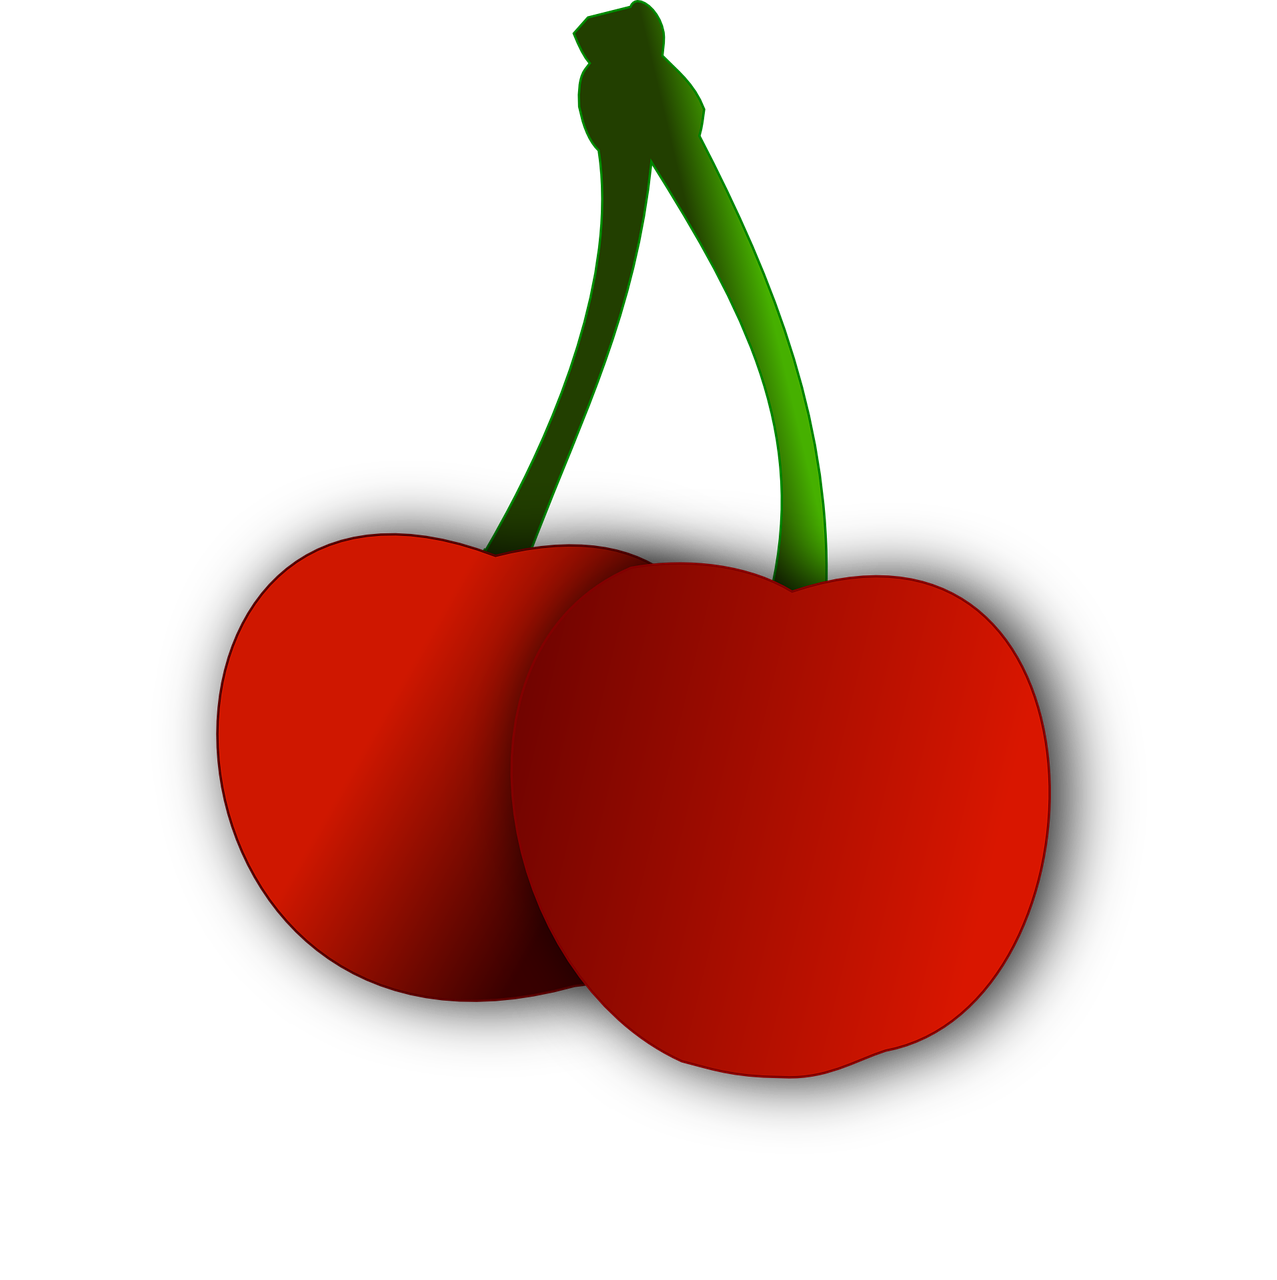 cherry fruit vector image free photo